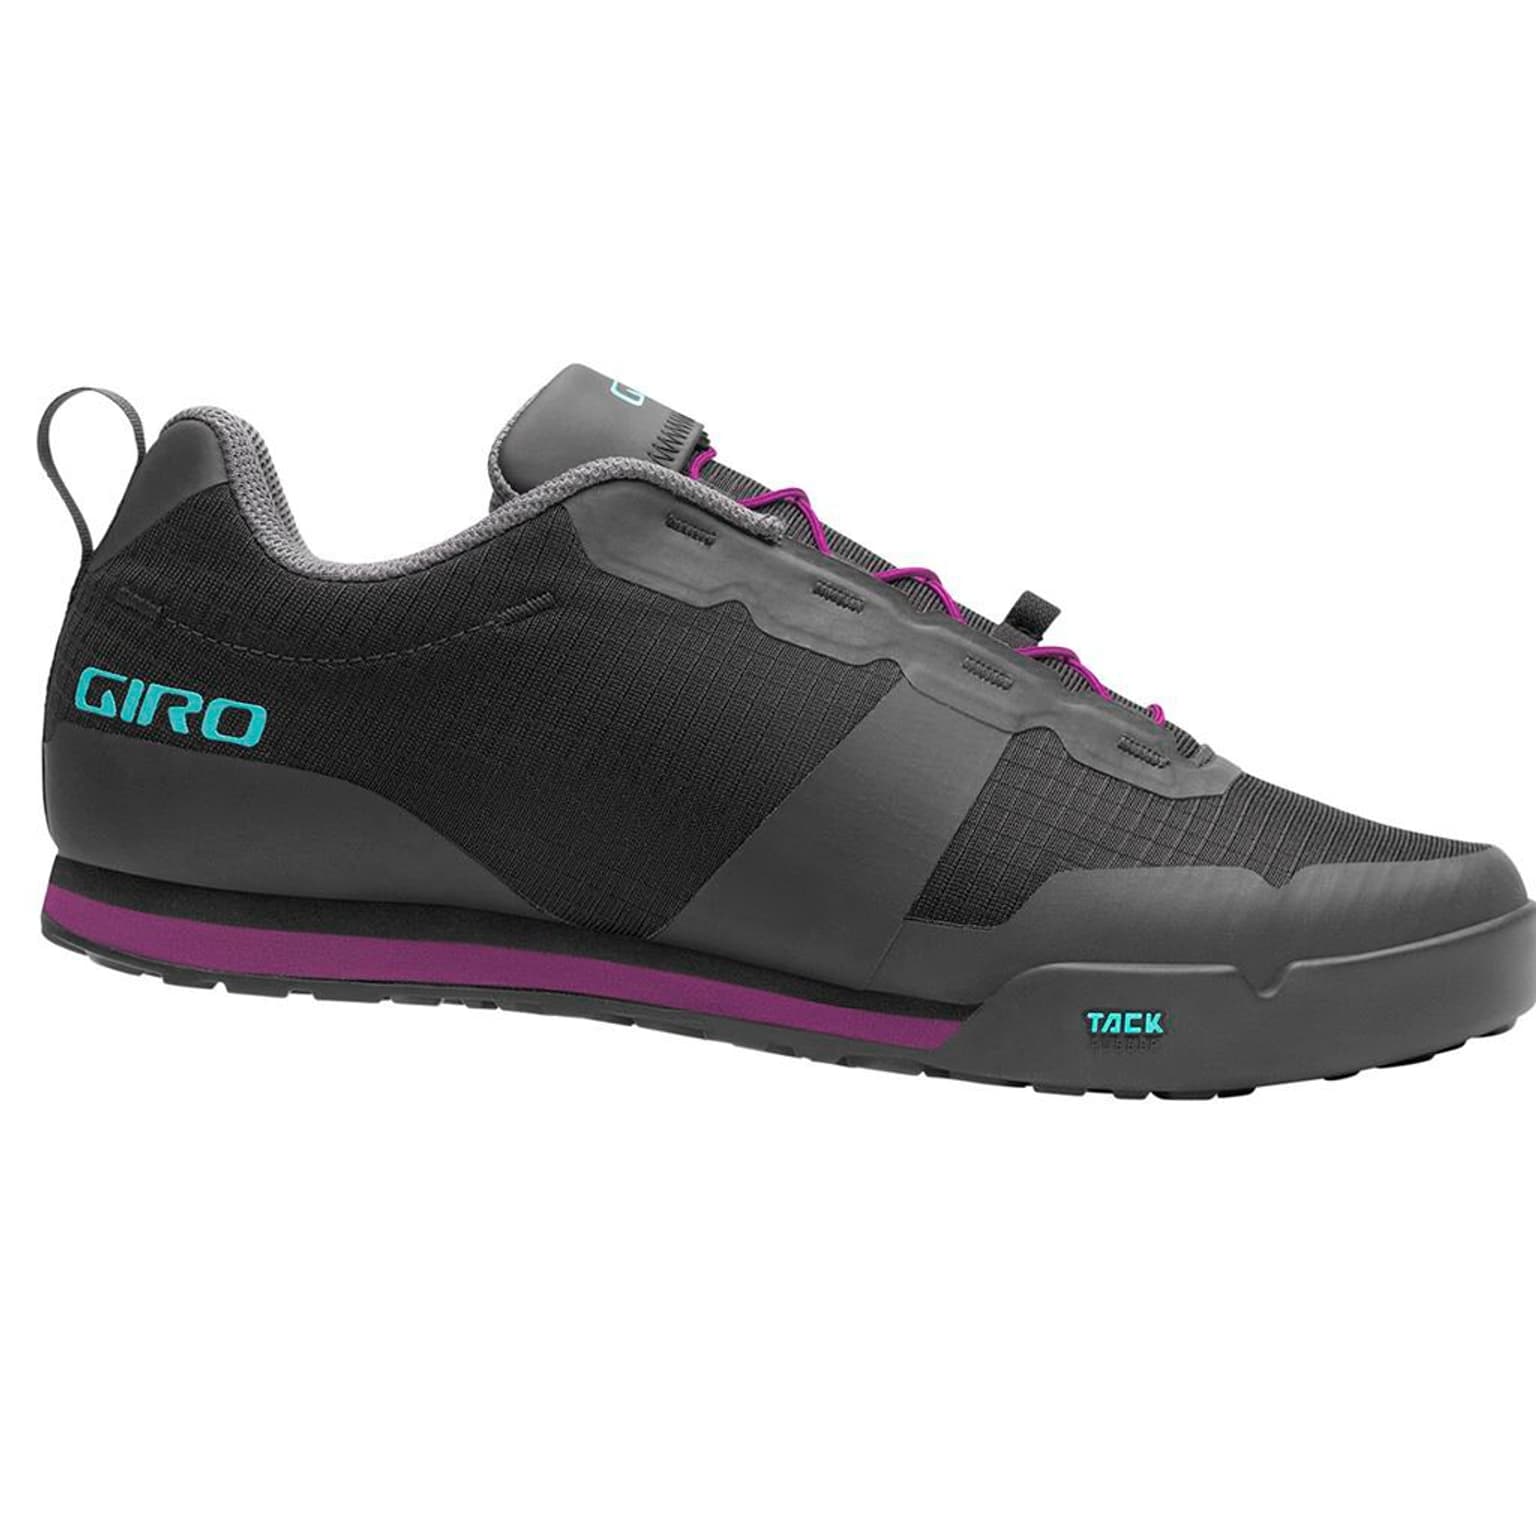 Giro Giro Tracker W FL Shoe Veloschuhe schwarz 1